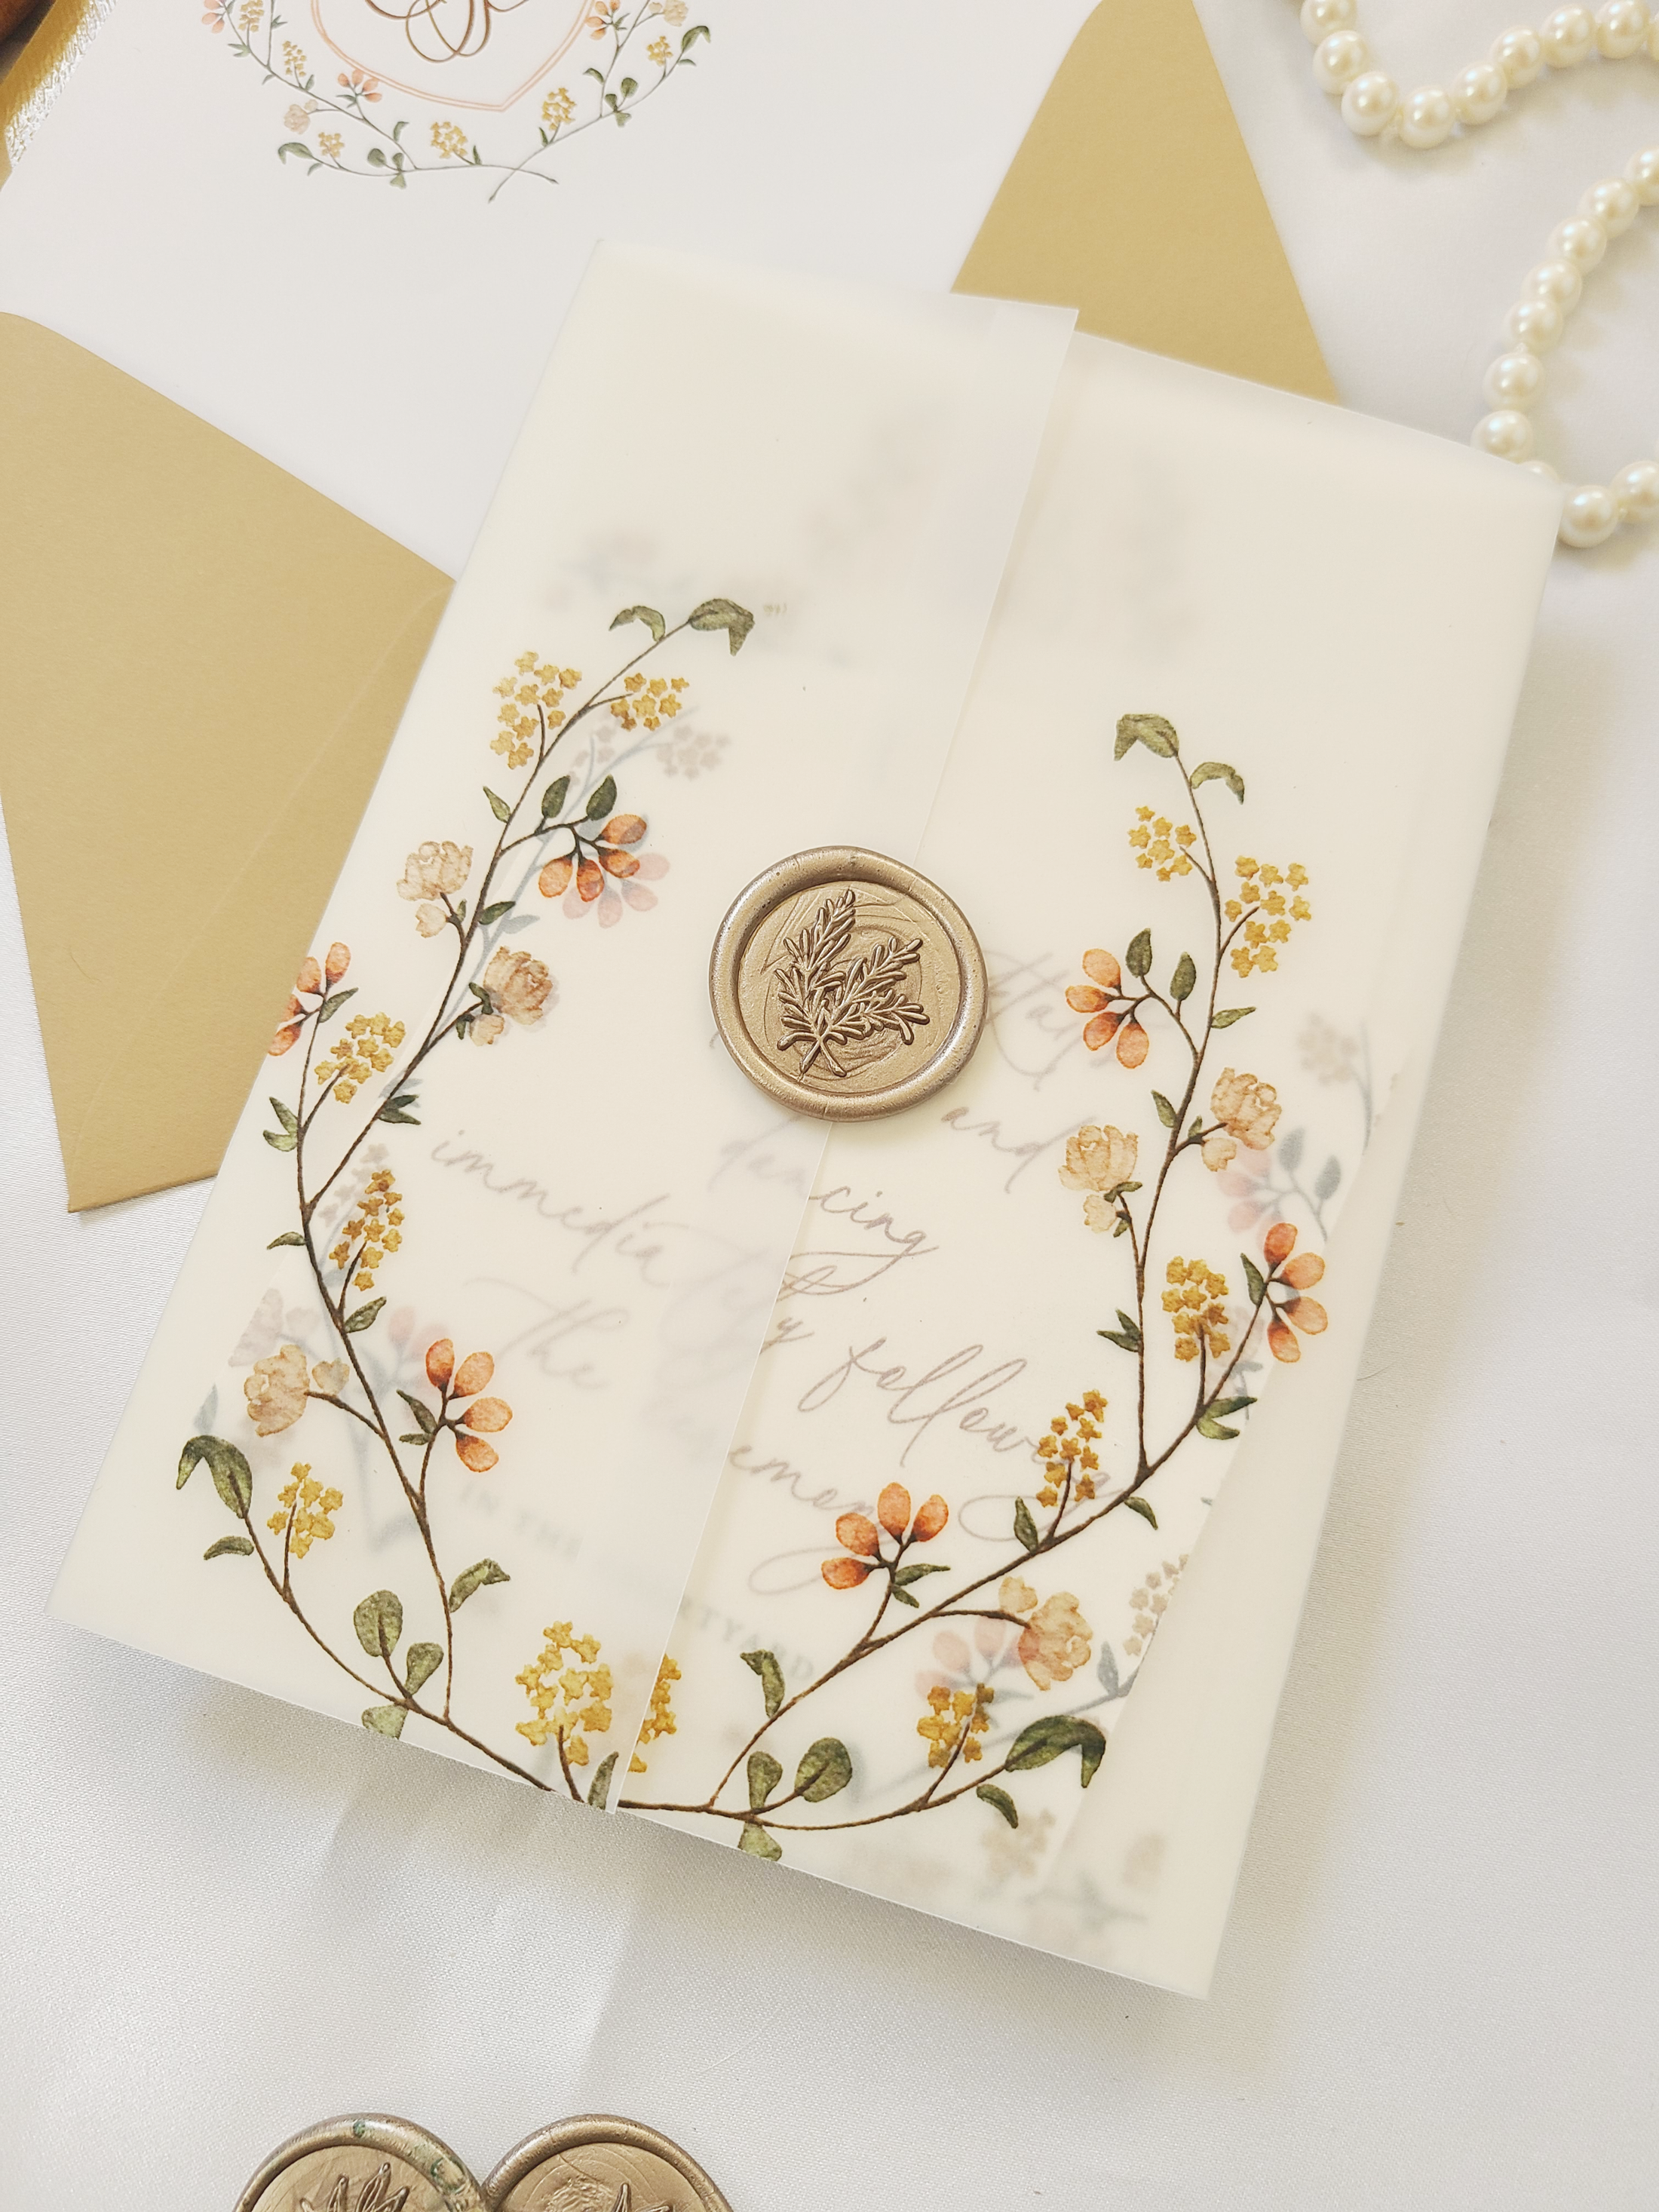 the tatiana wedding invitation suite with warm flowers around a classic wedding monogram crest